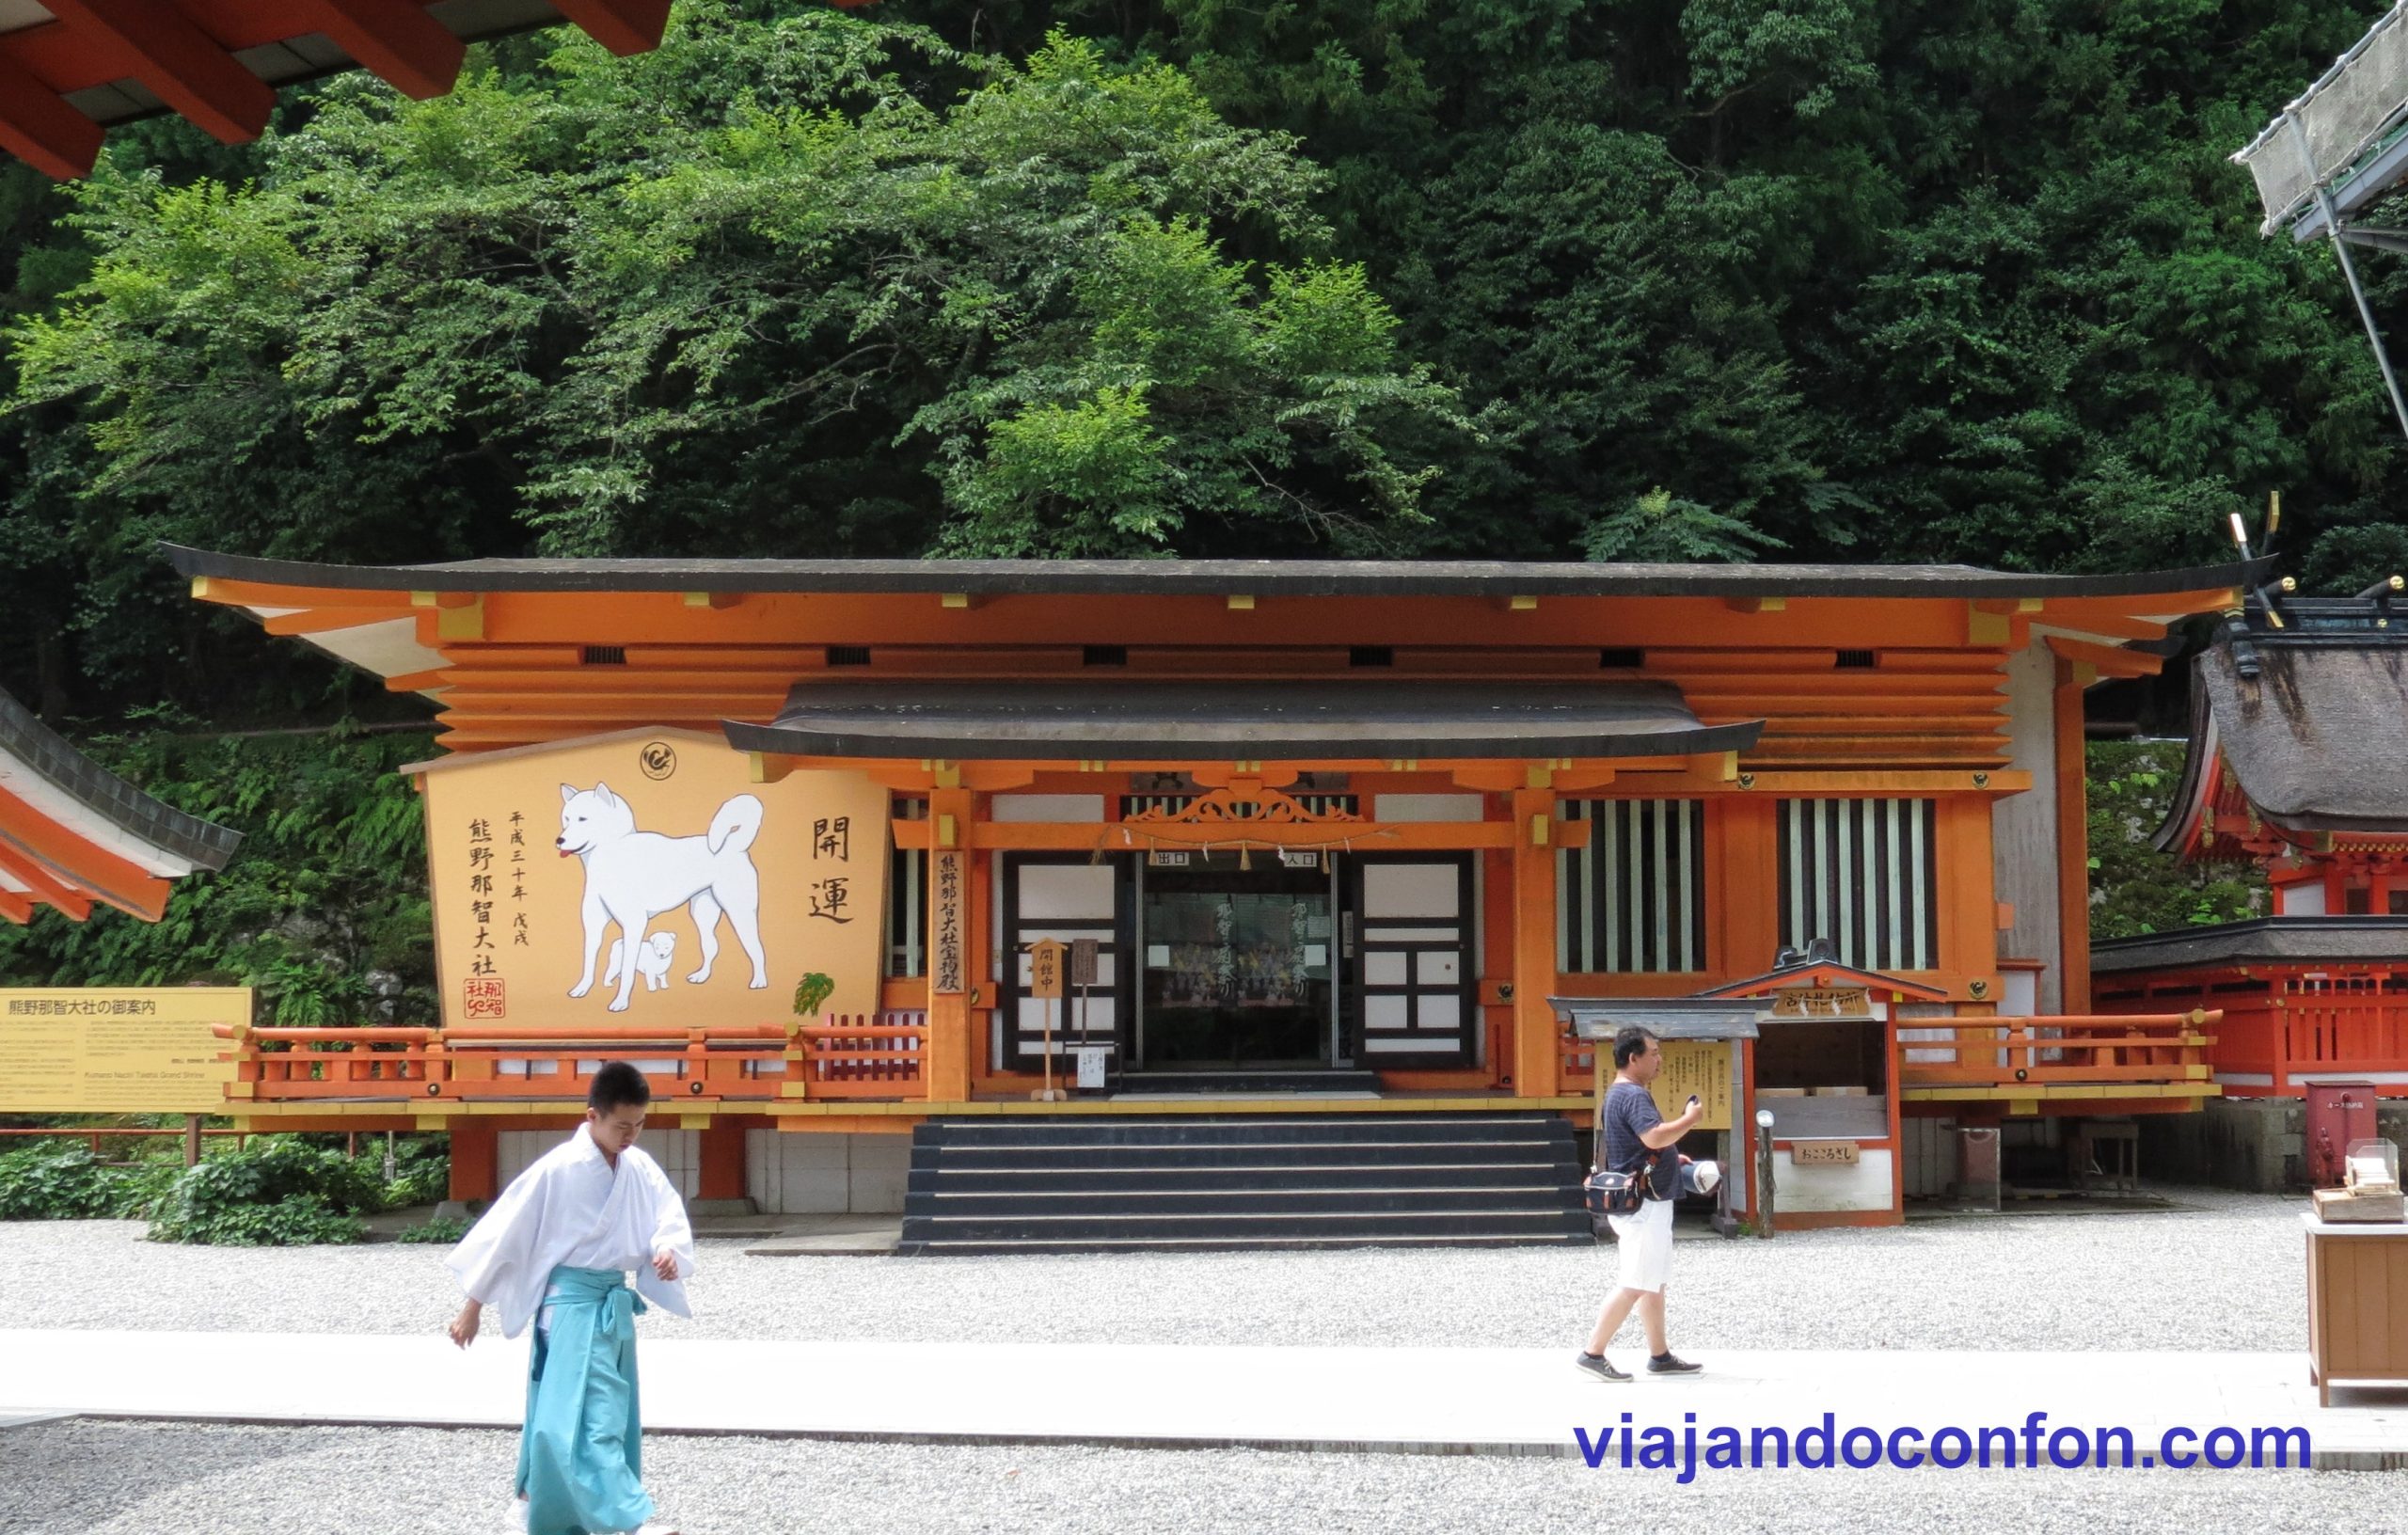 Salón del Tesoro (熊野那智大社 宝物殿)
Gran Santuario Kumano Nachi Taisa (熊野那智大社)